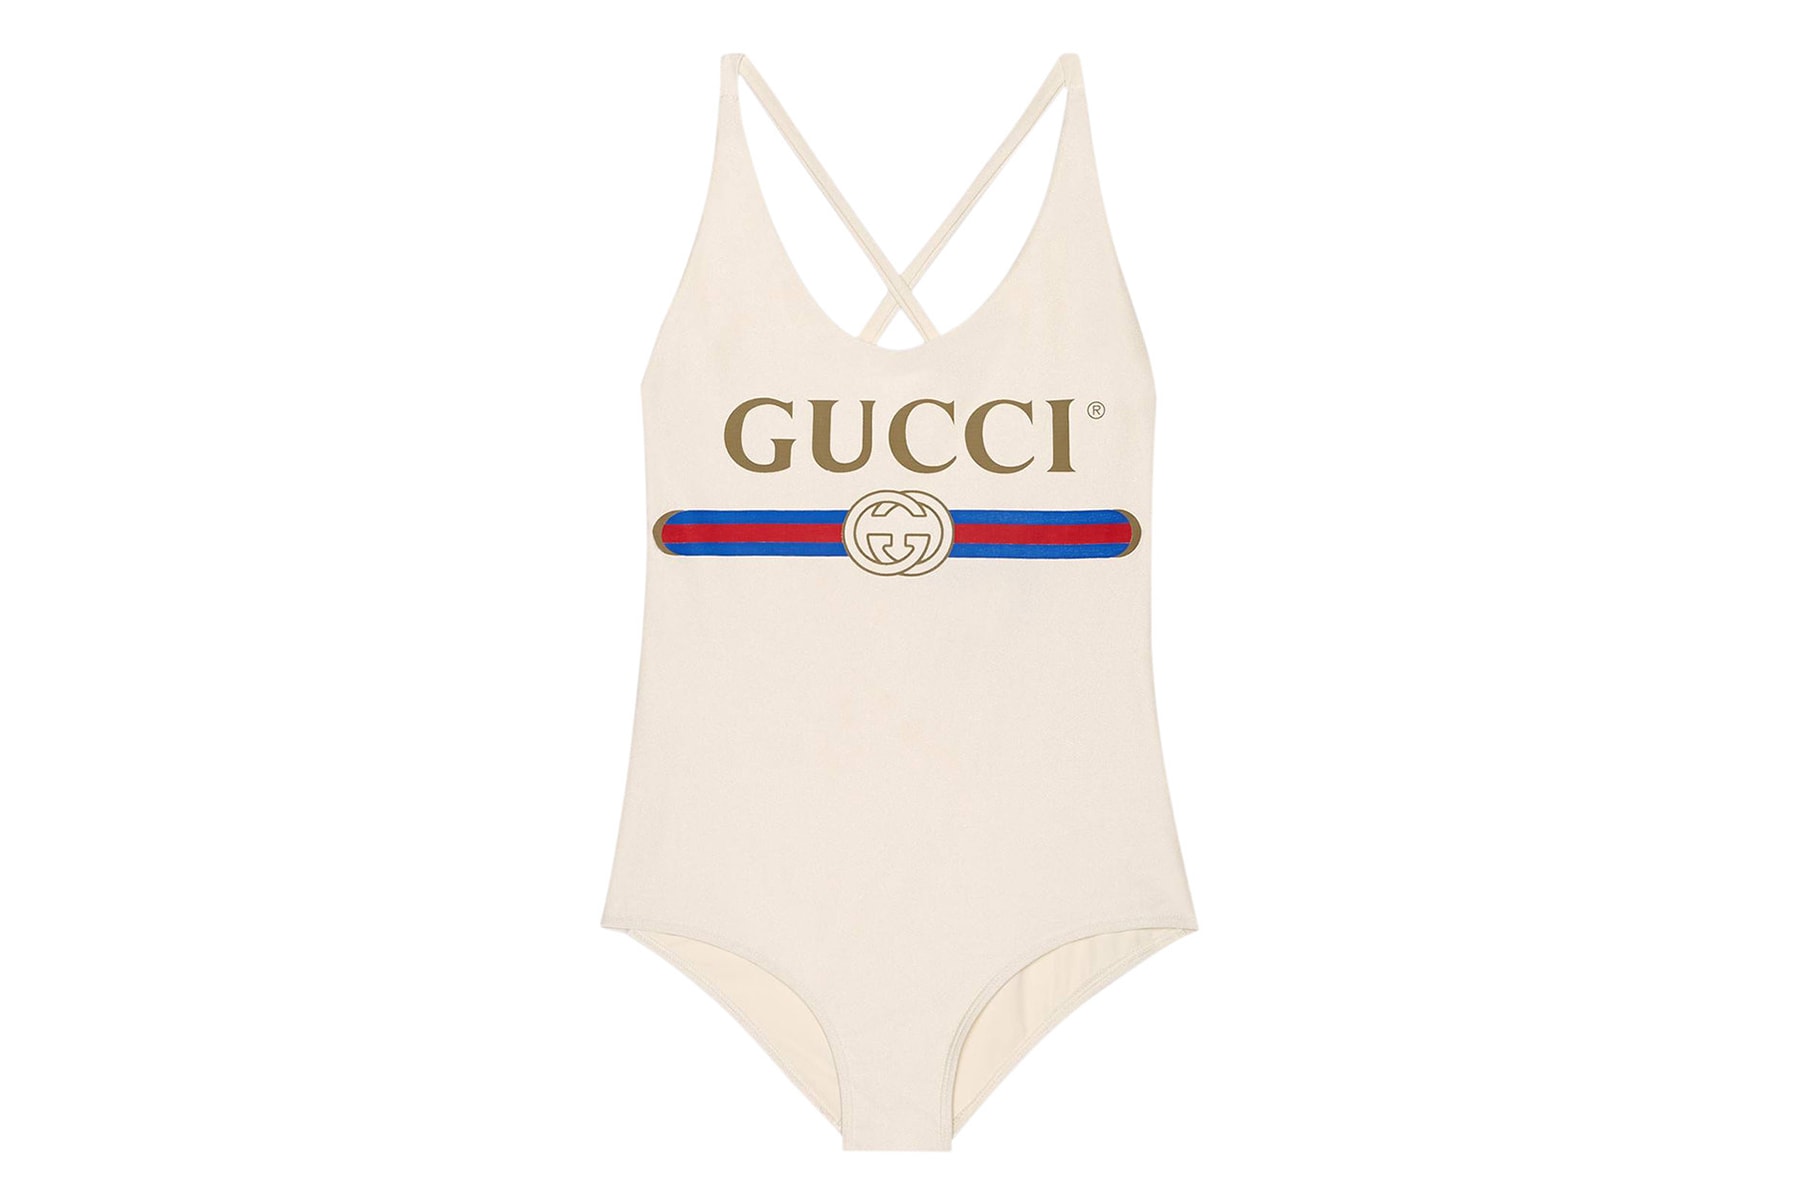 Gucci Vintage Logo Sparkling Swimsuit Retro Bathing Suit Swimwear White Red Blue Alessandro Michele